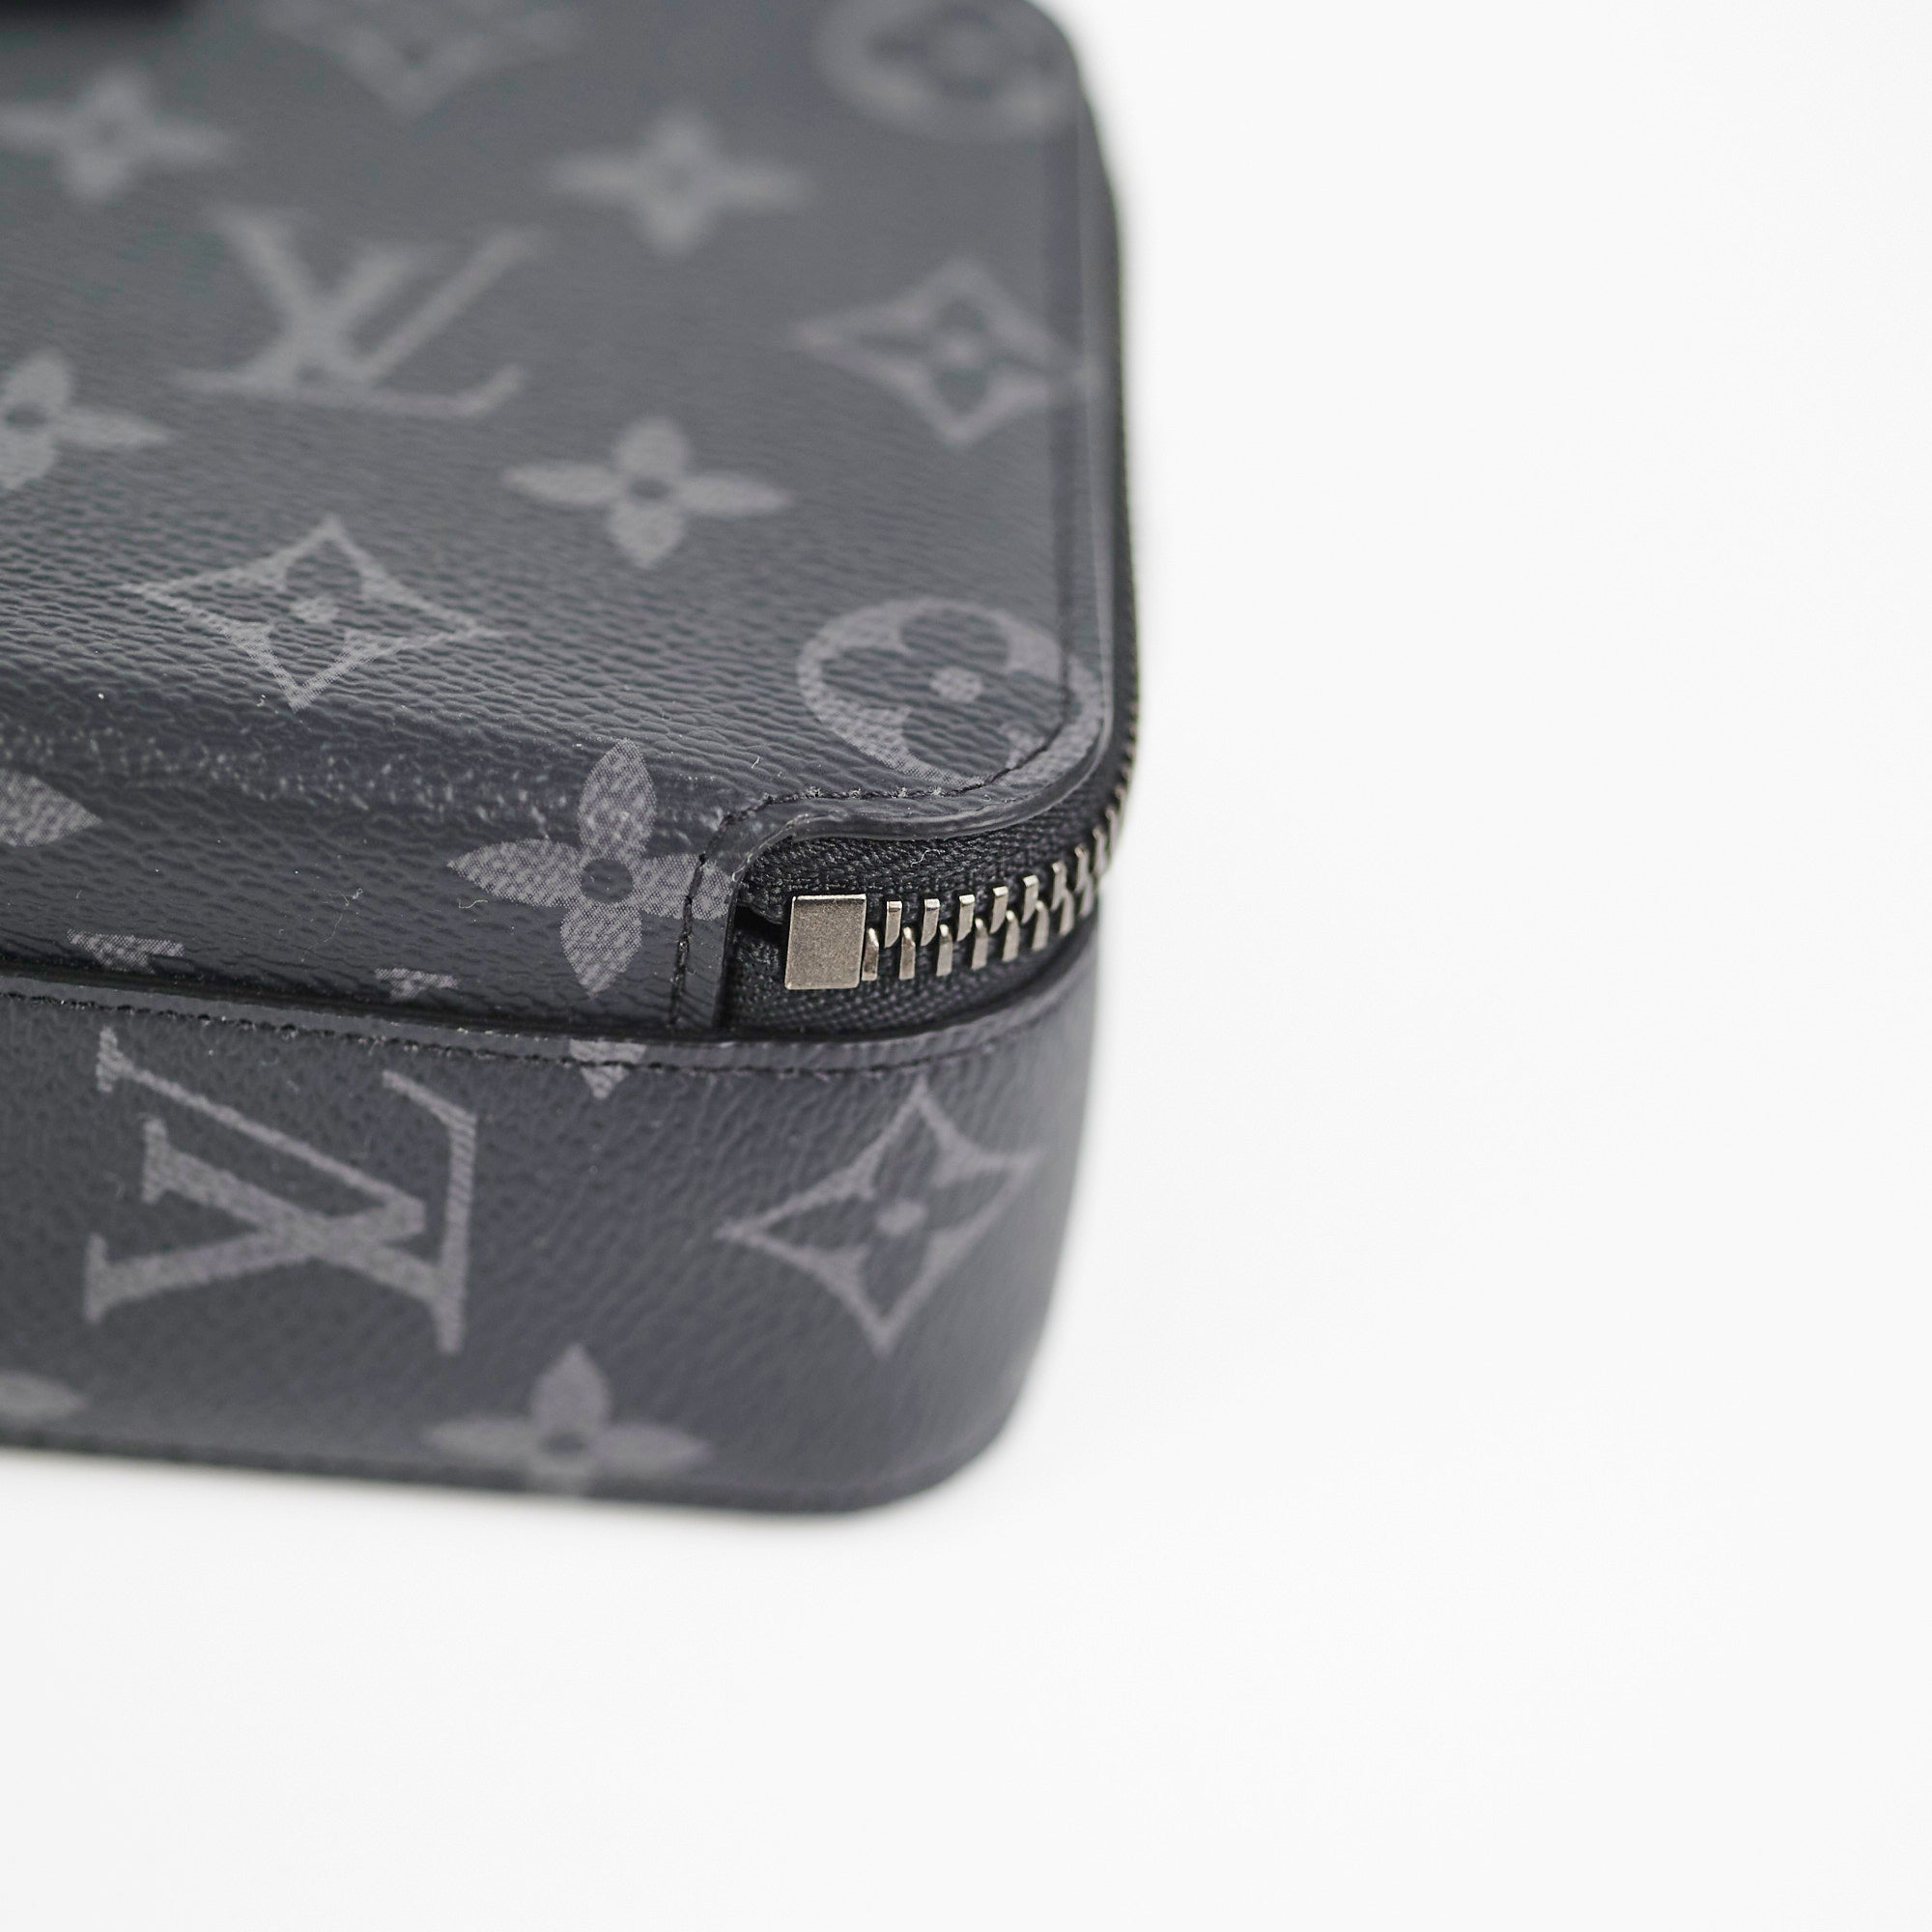 Alpha Wearable Wallet leather travel bag